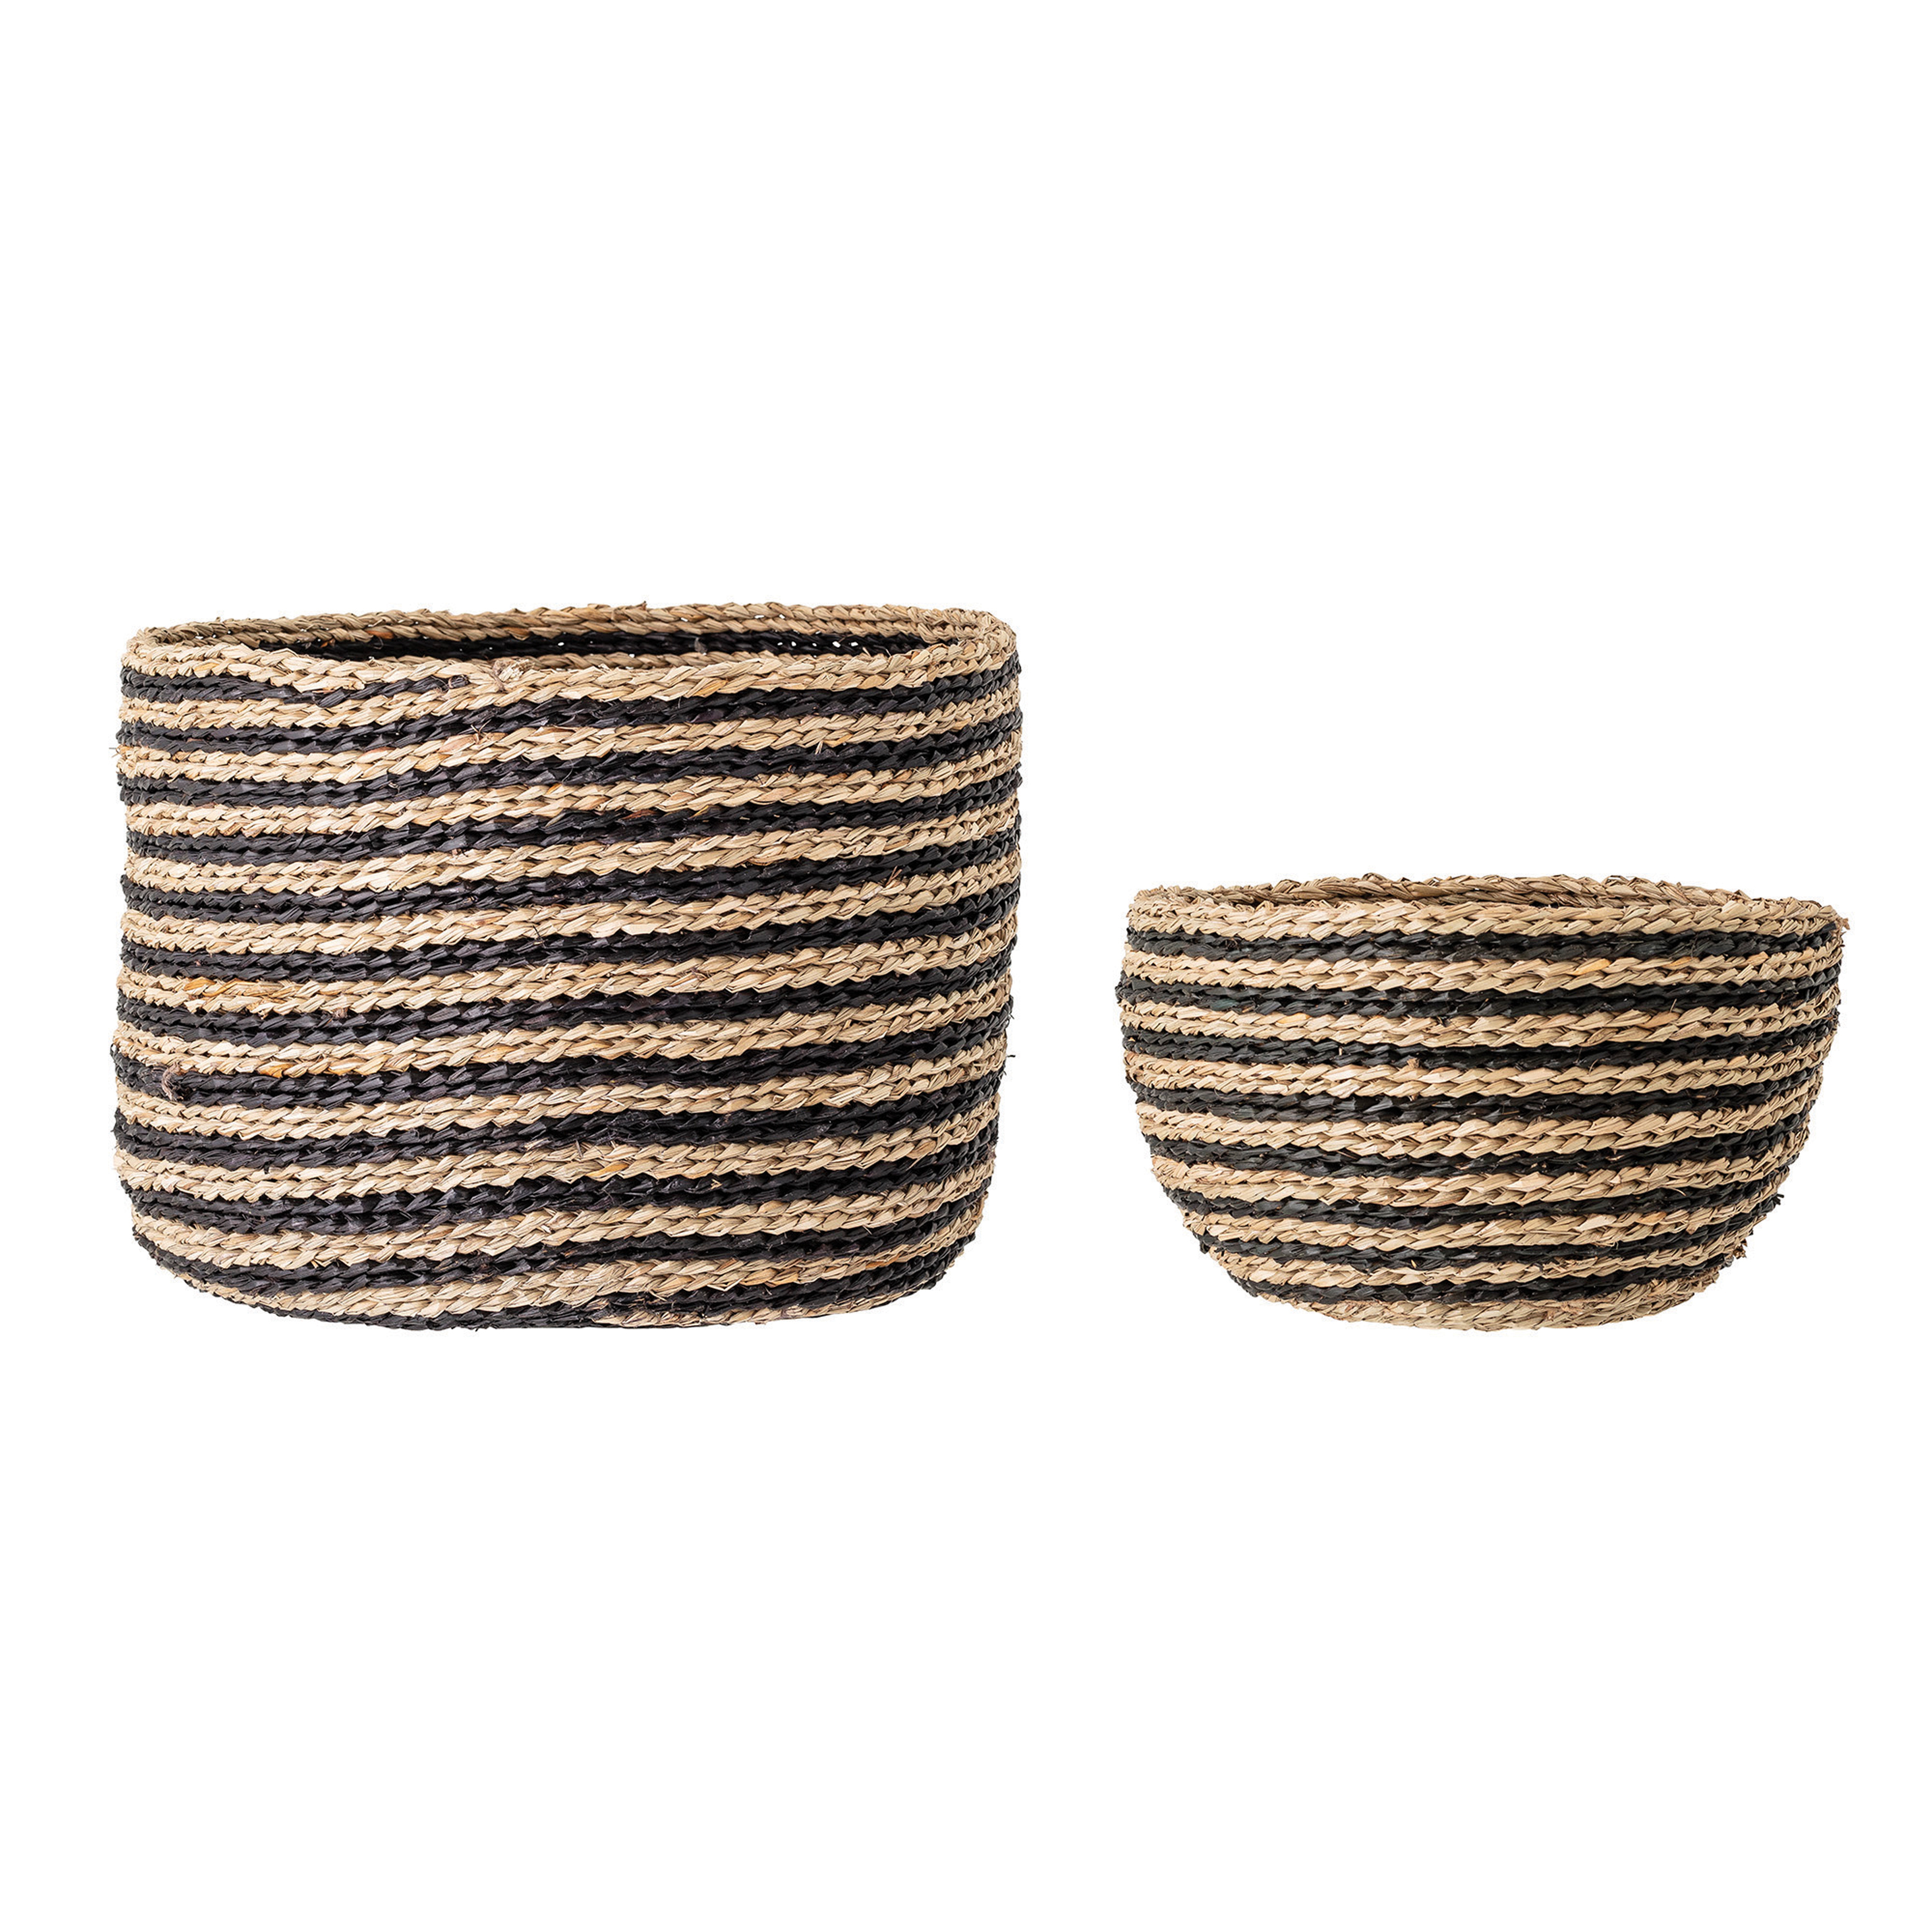 Handwoven Striped Seagrass Baskets (Set of 2 Sizes) - Moss & Wilder